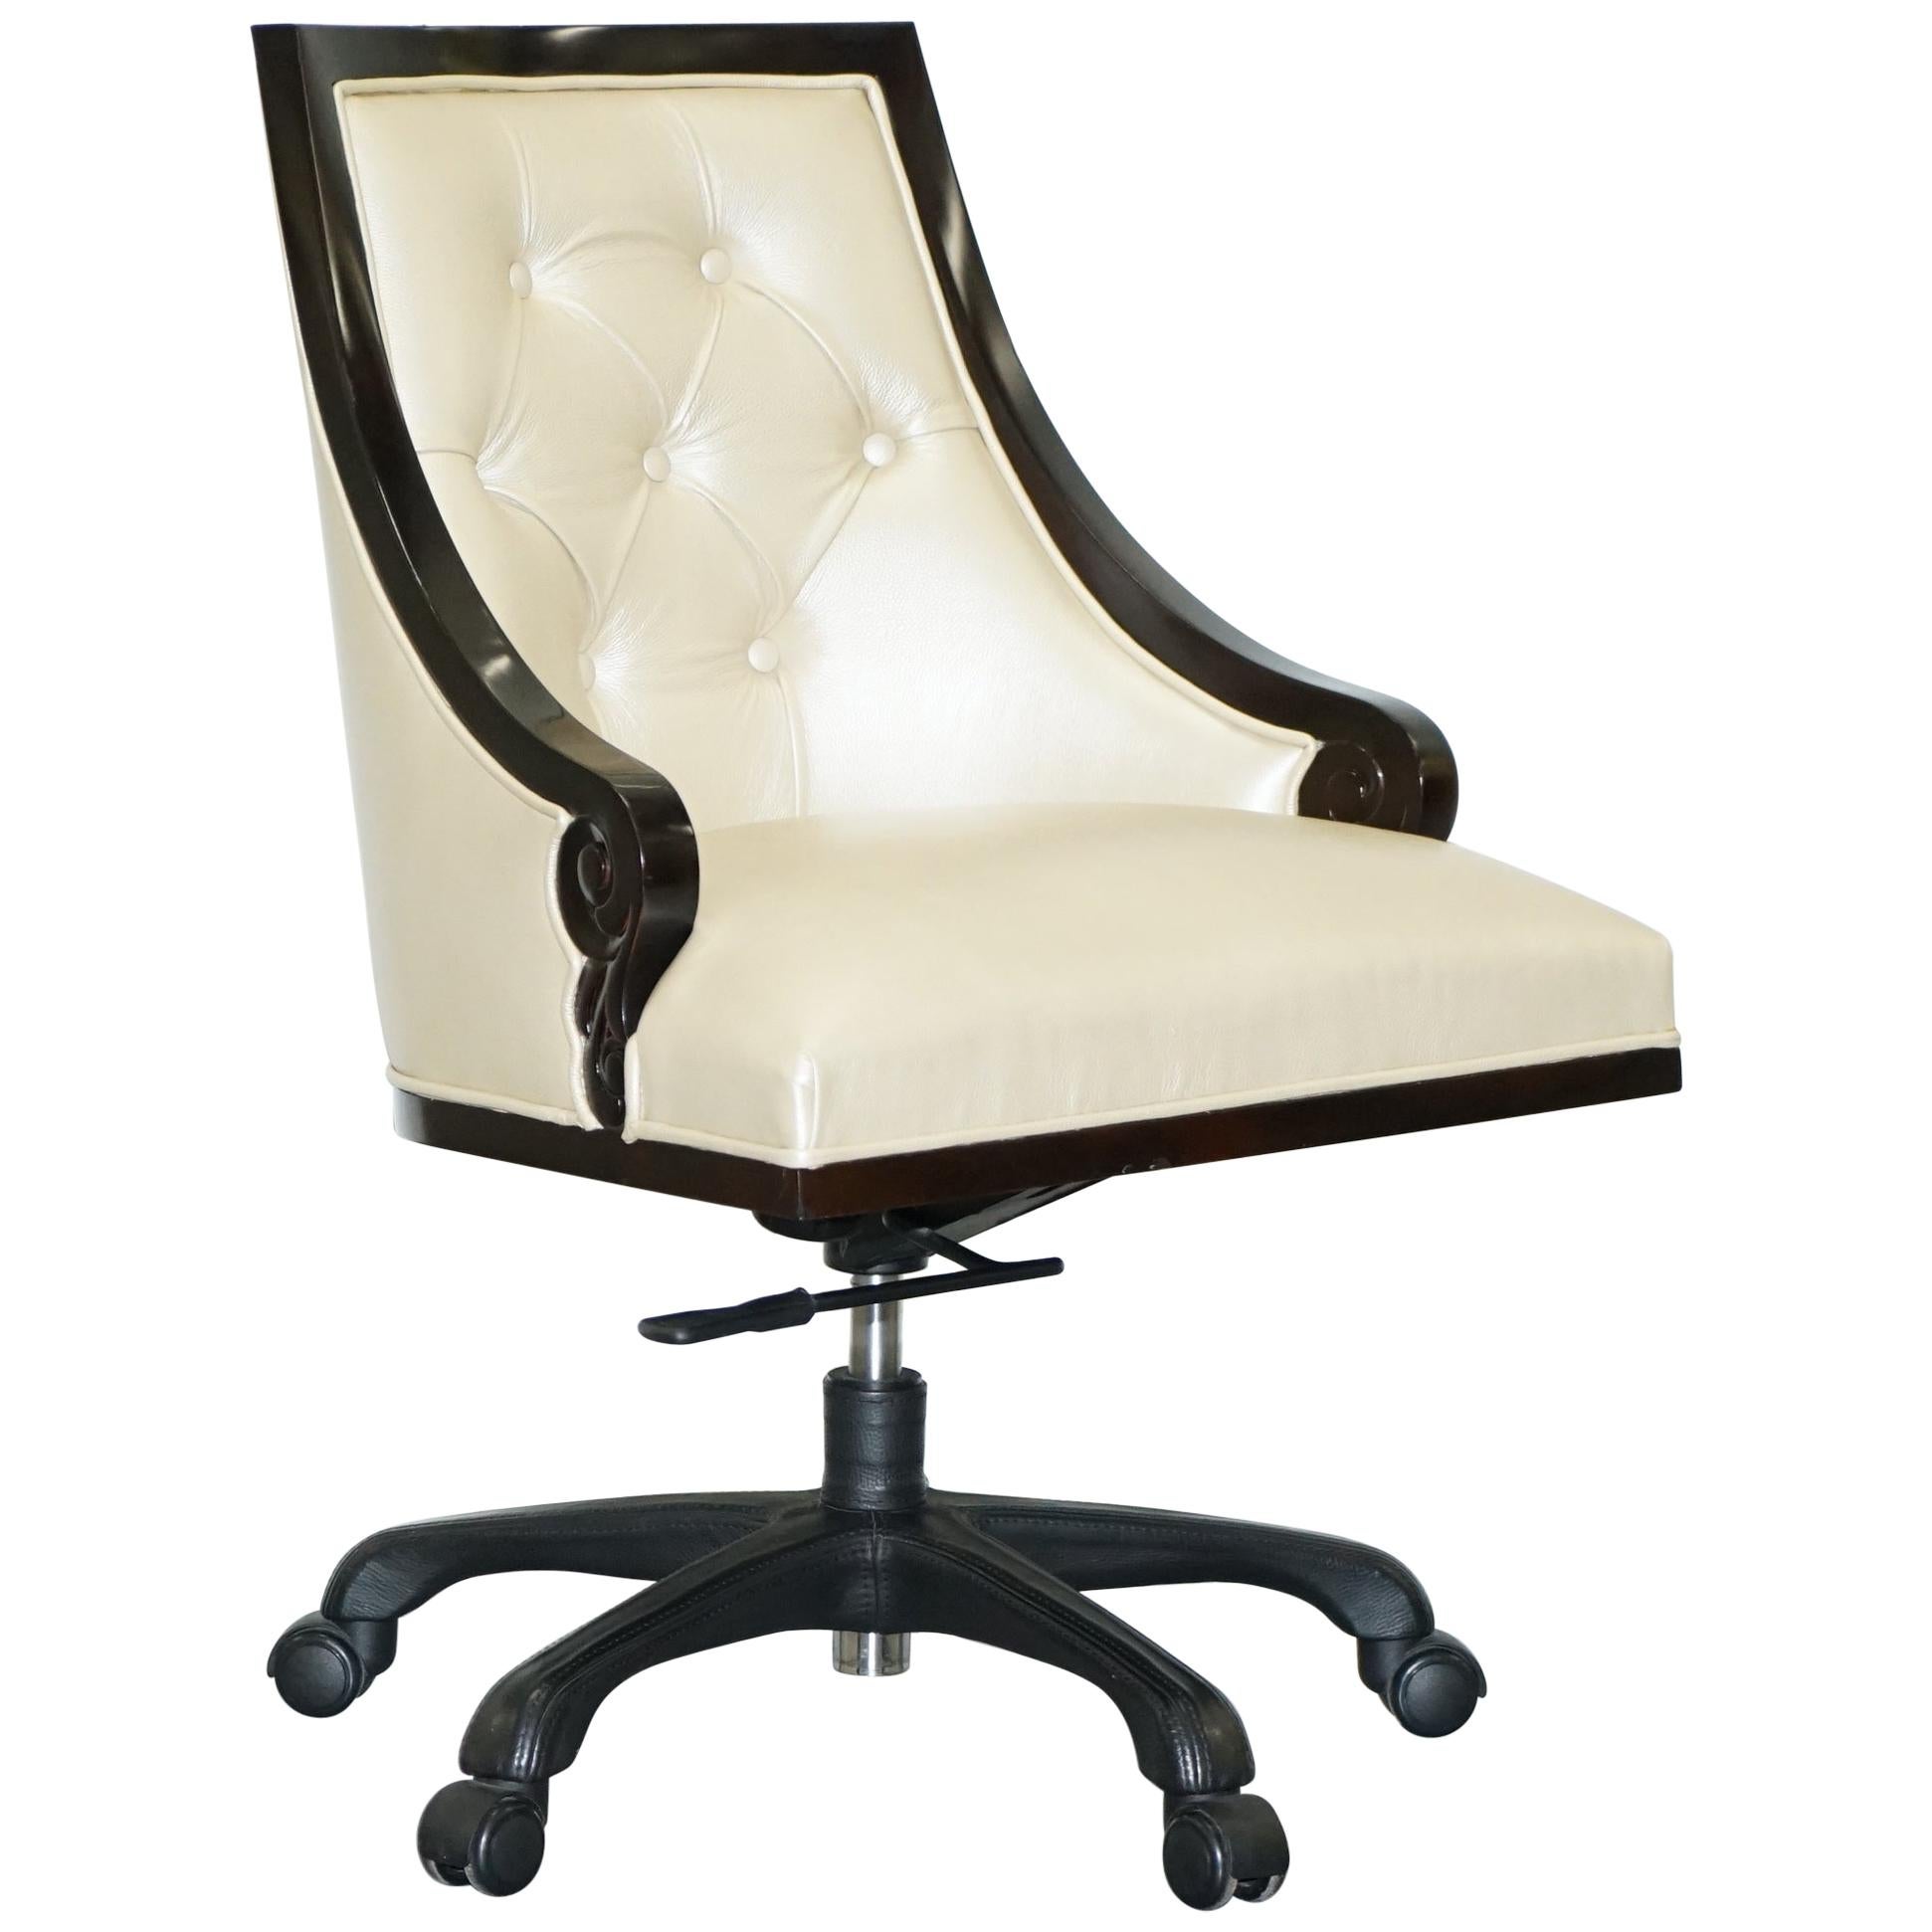 Christopher Guy Megeve Cream Leather Office Desk Captains Chair